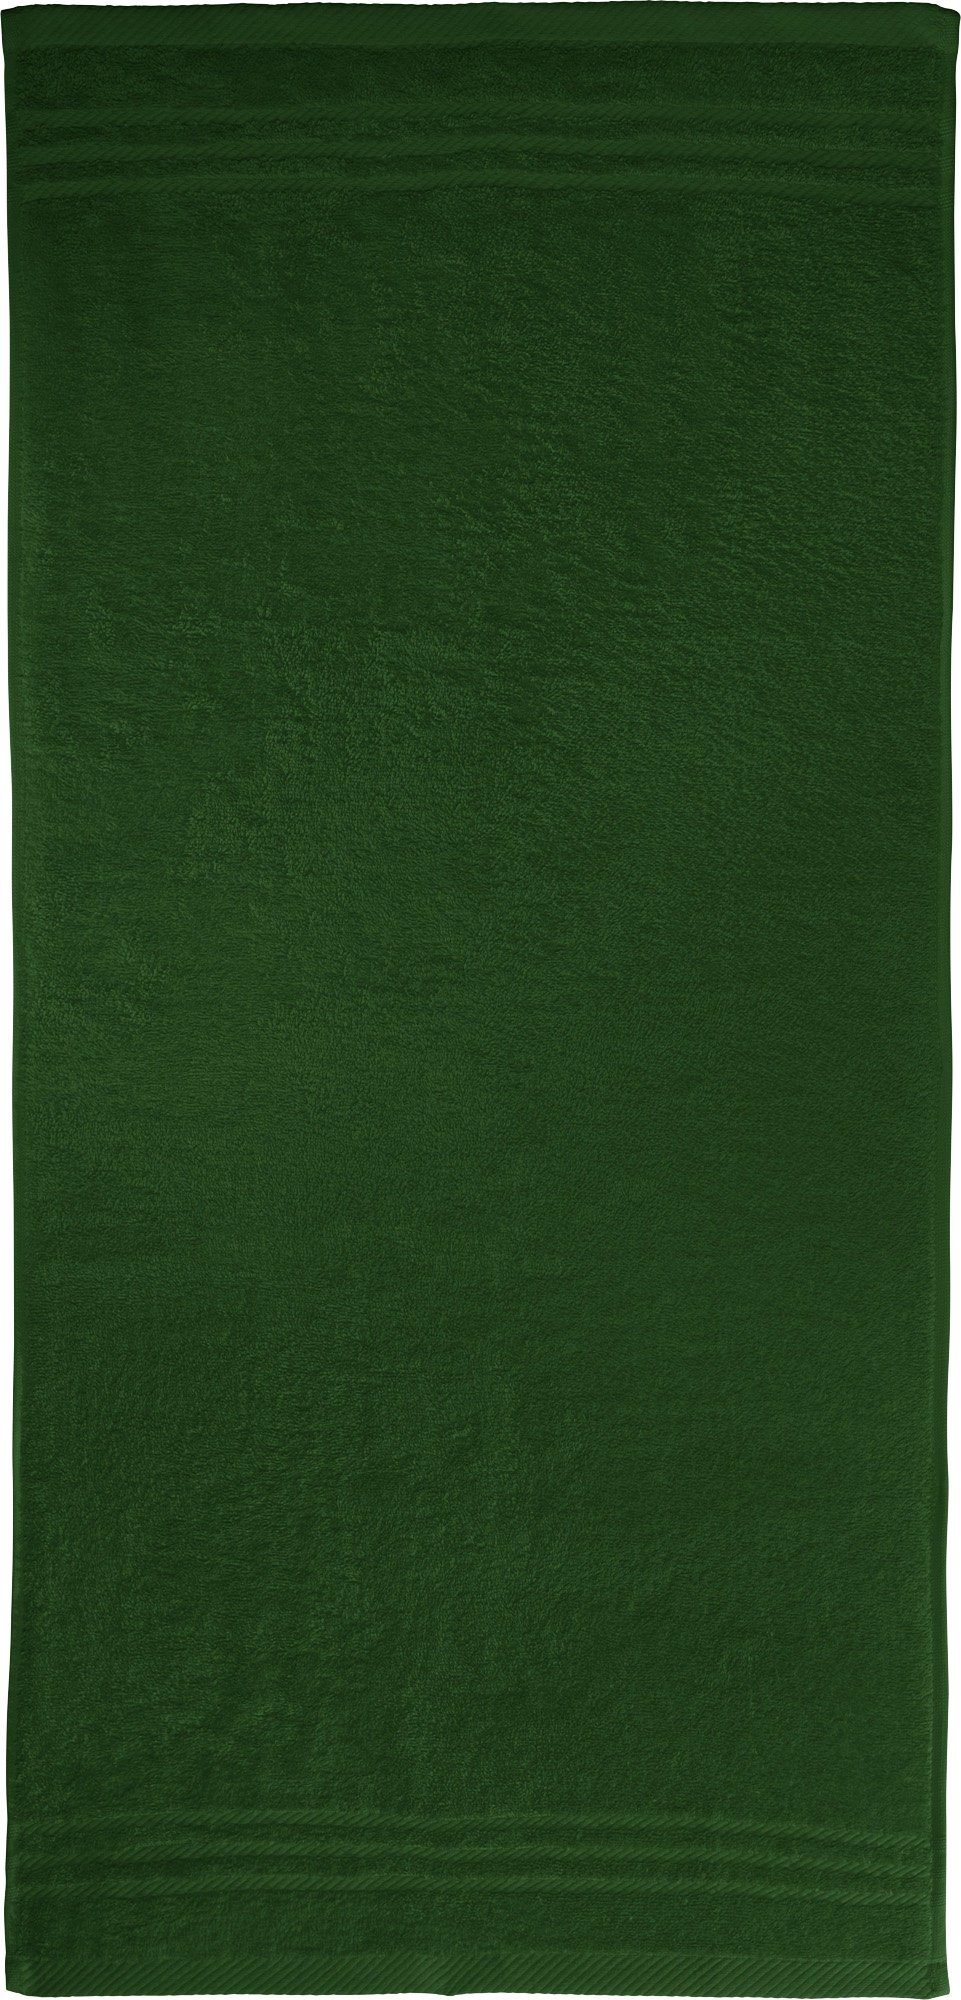 REDBEST Handtuch Handtuch, Walk-Frottier Frottier Uni (1-St), dunkelgrün